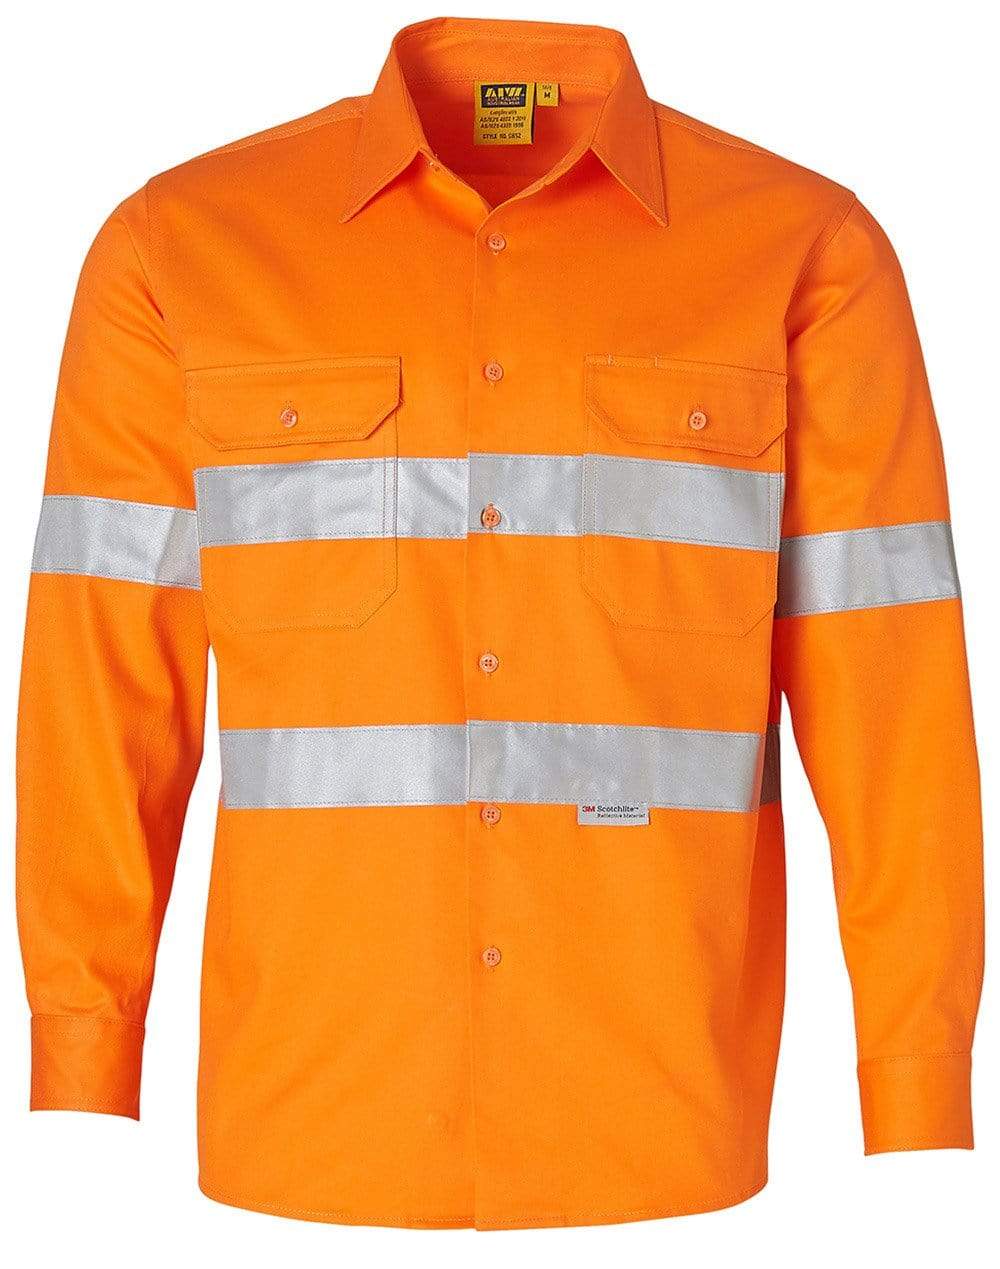 Cotton Drill Safety Shirt - Unisex SW52 Work Wear Australian Industrial Wear Fluoro Orange 2XS 